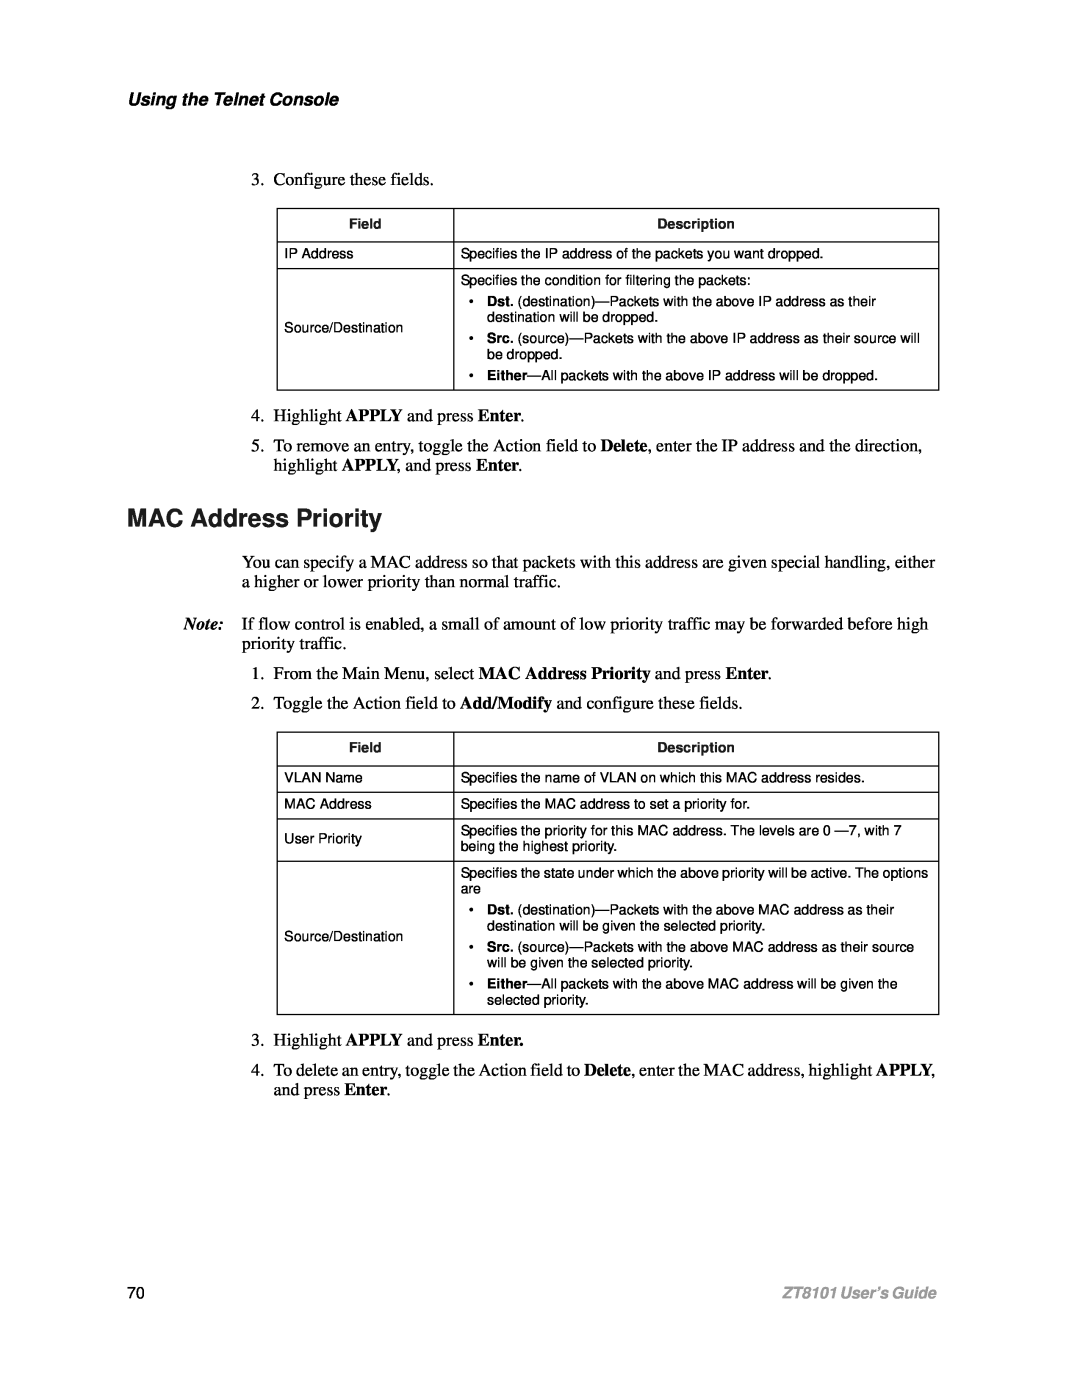 Intel ZT8101 user manual MAC Address Priority, Using the Telnet Console 